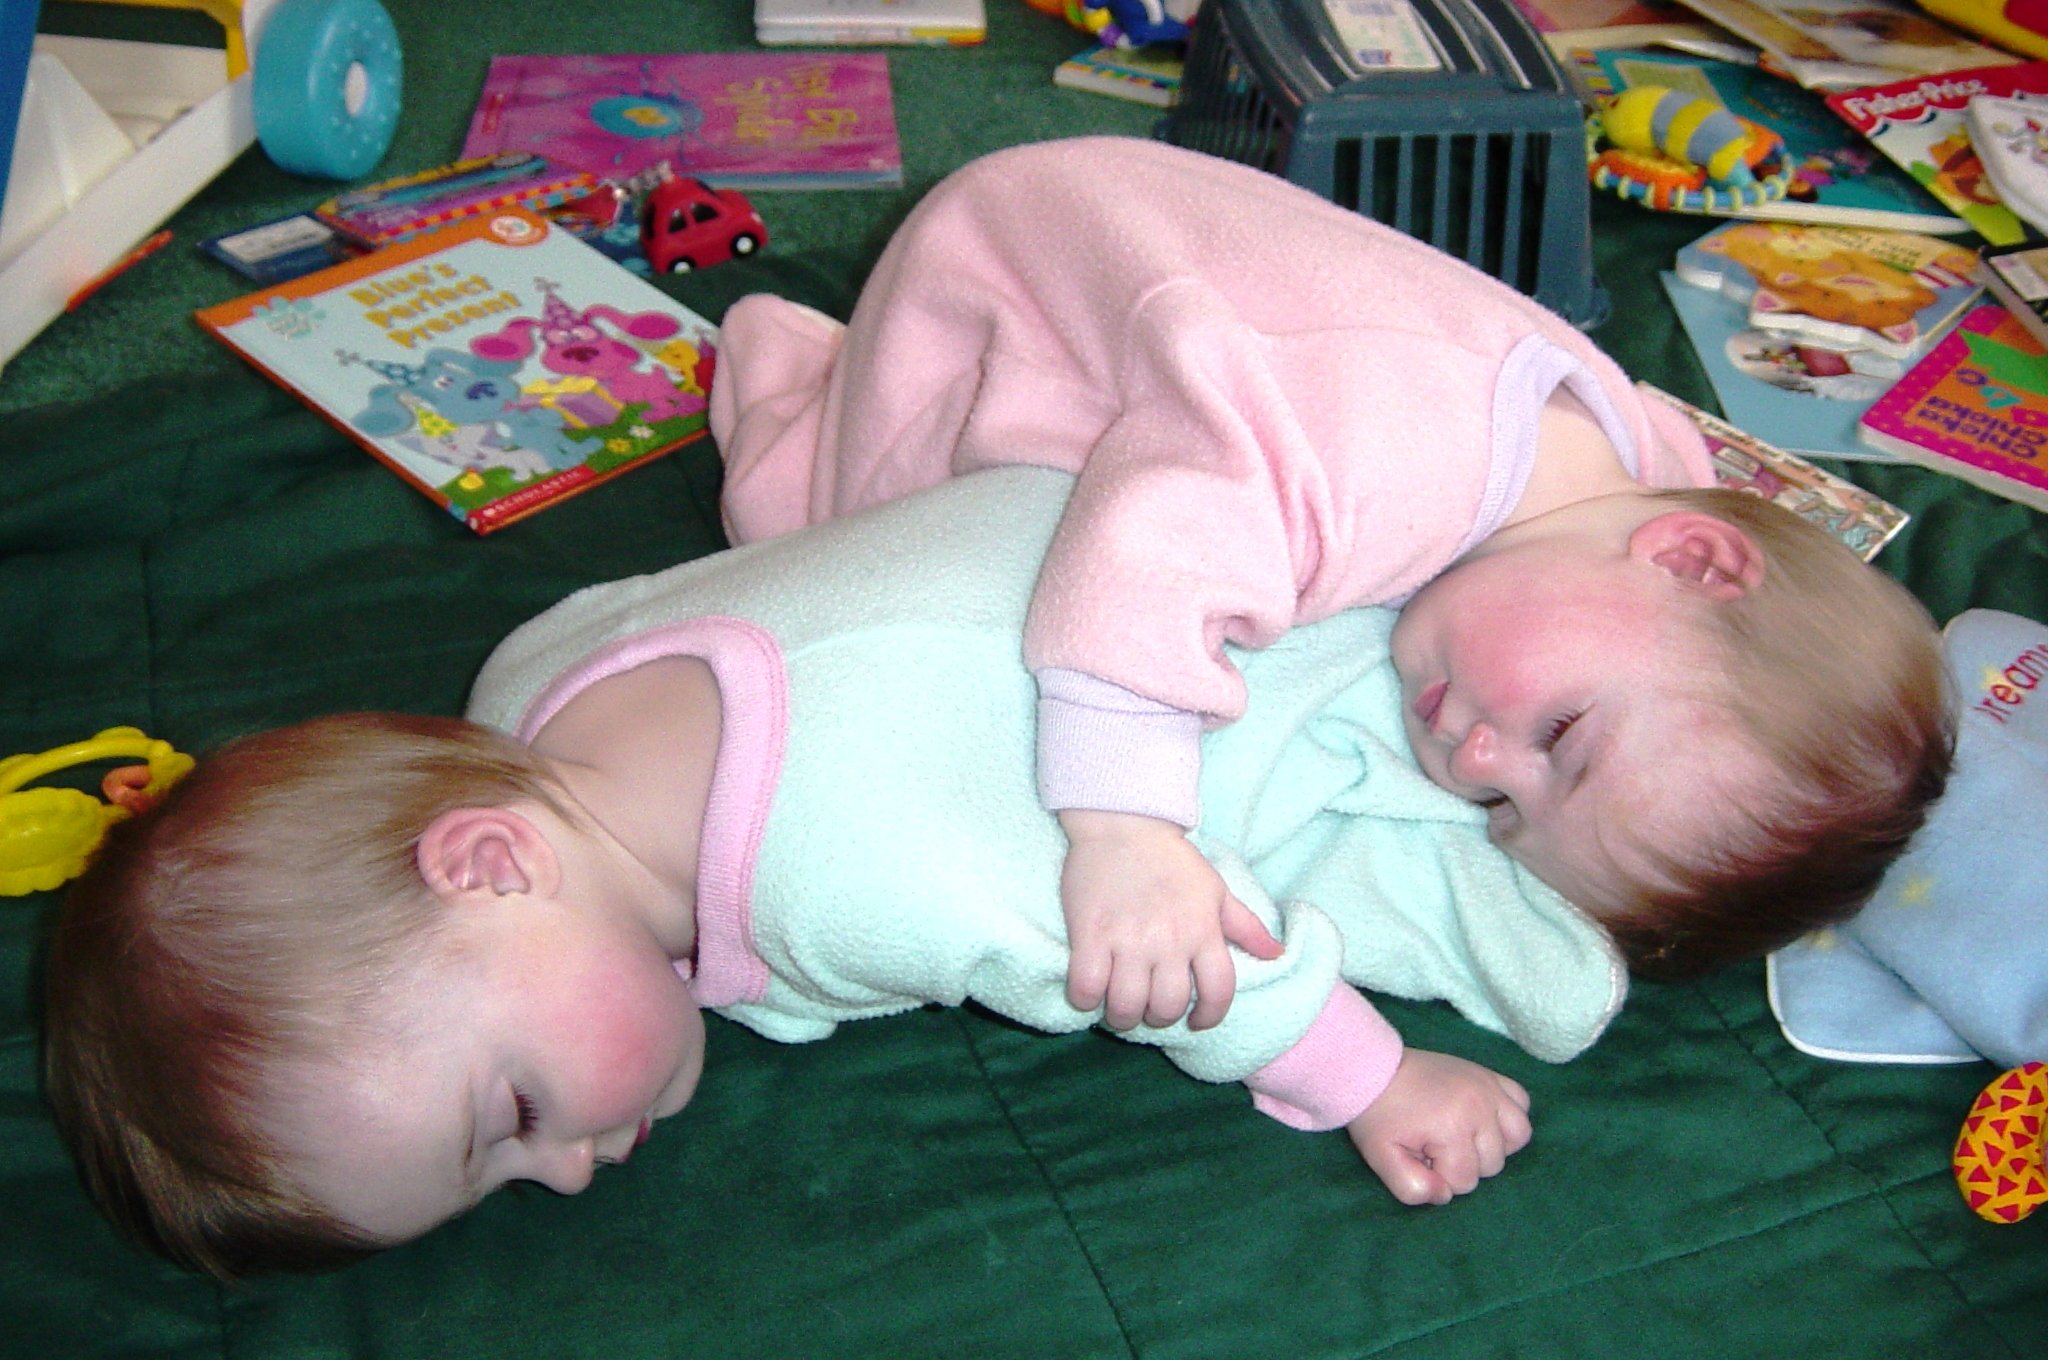 Gemelas durmiendo juntas.| Imagen: Wikimedia Commons